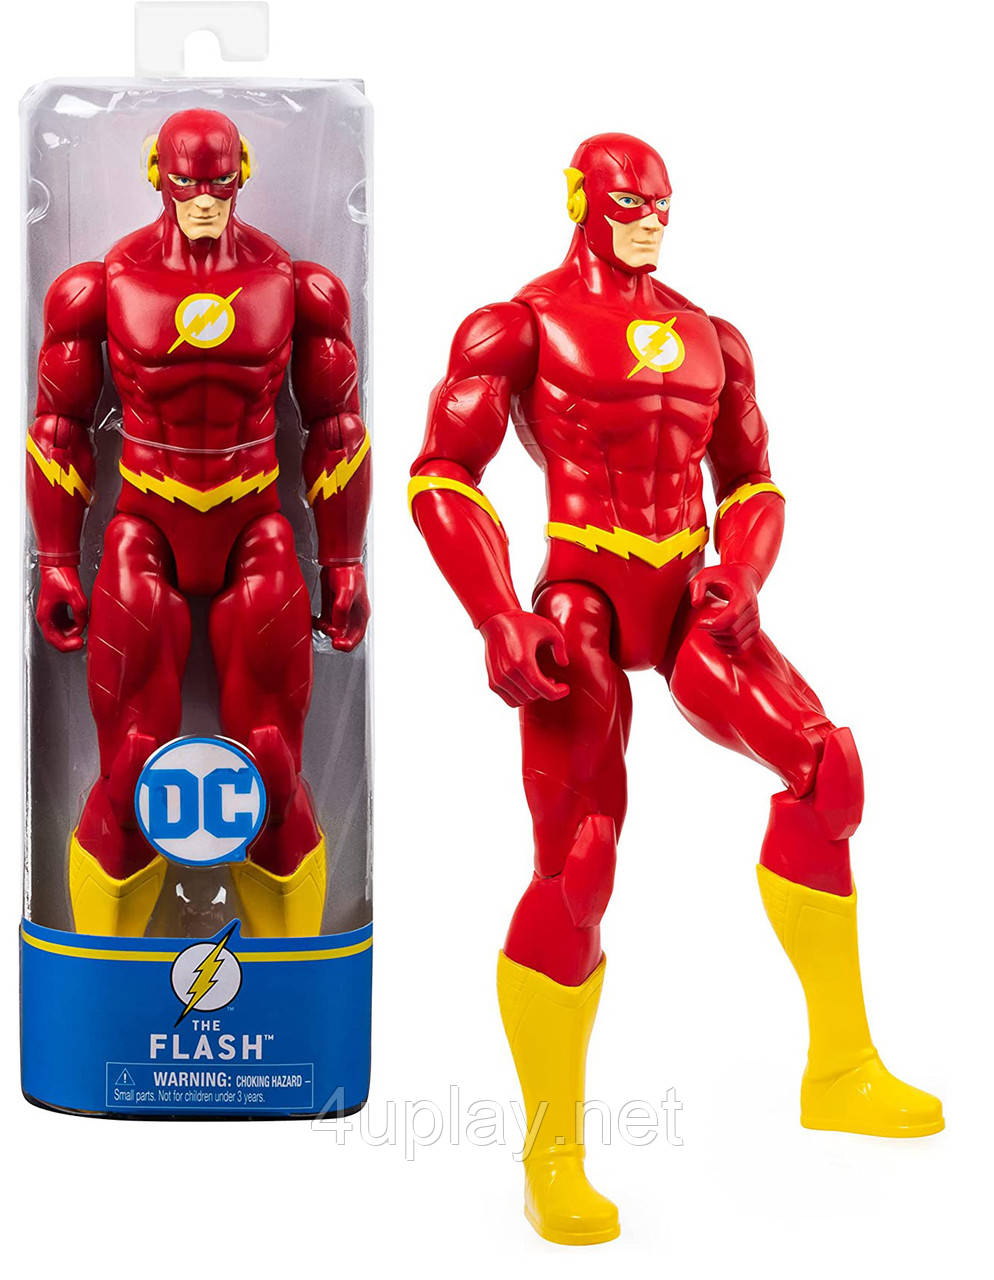 Ігрова фігурка Флеш 30см. DC Comics 12-inch THE FLASH Action Figure. 11 точок артикуляції. Spin Master